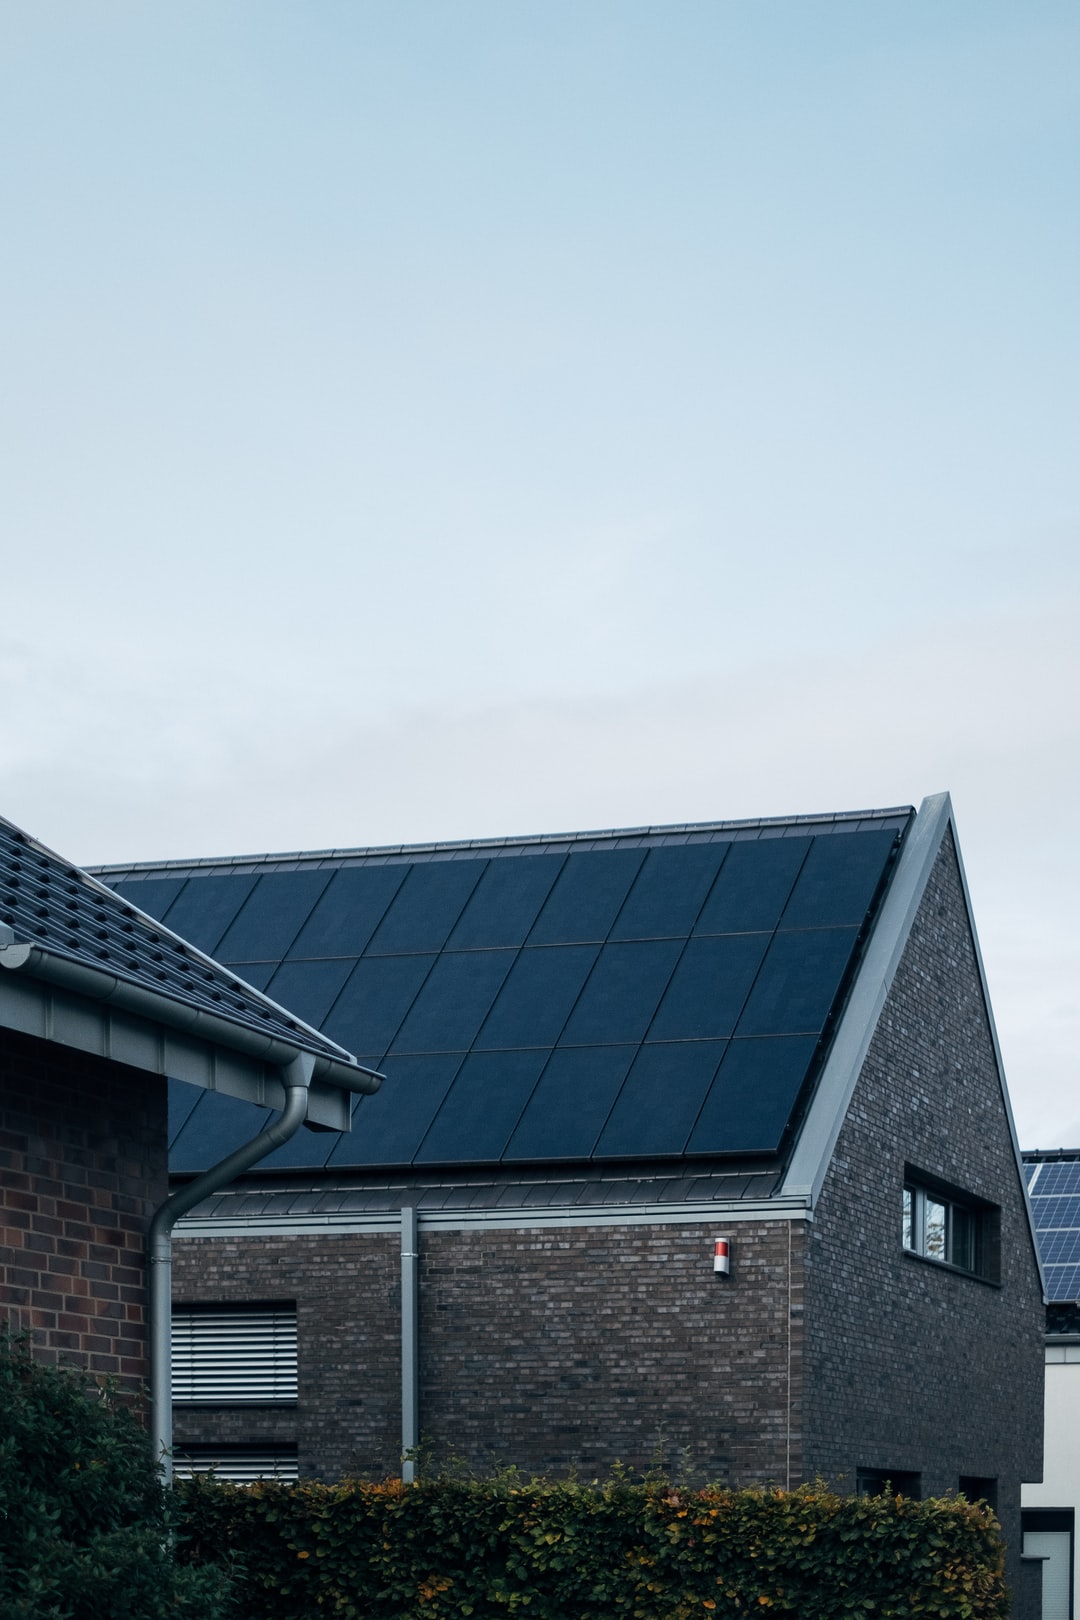 pleasanton solar panels on residential home